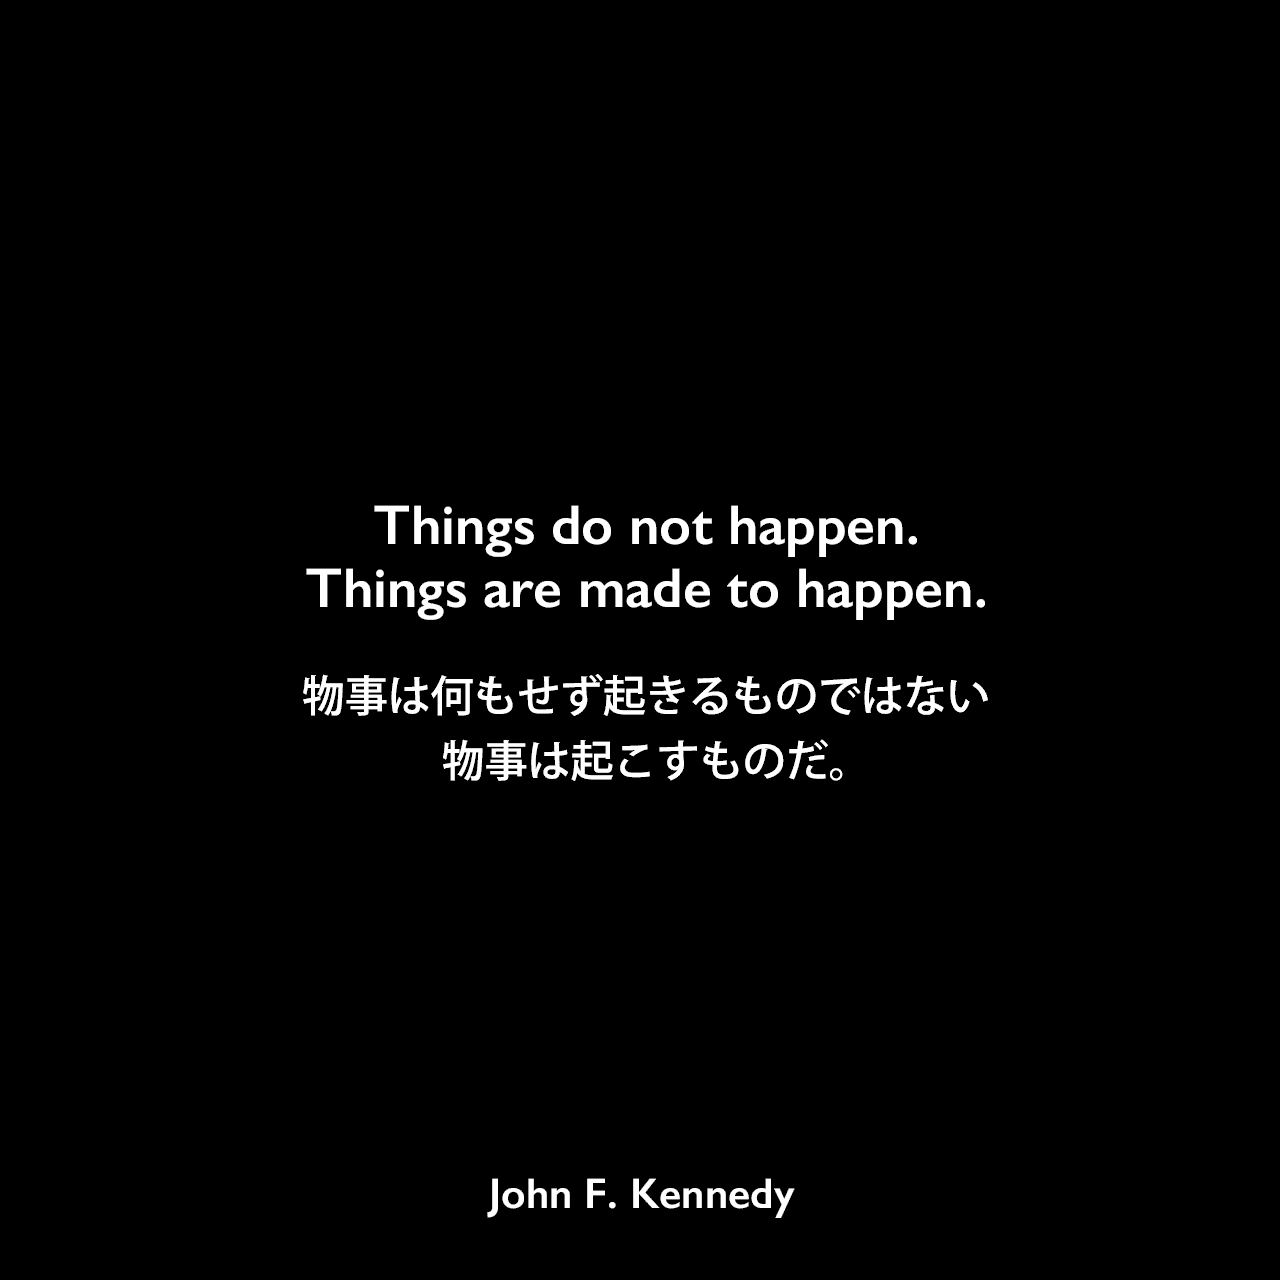 Things do not happen. Things are made to happen.物事は何もせず起きるものではない、物事は起こすものだ。- アーカンソー州フェアグラウンドでのスピーチJohn F Kennedy